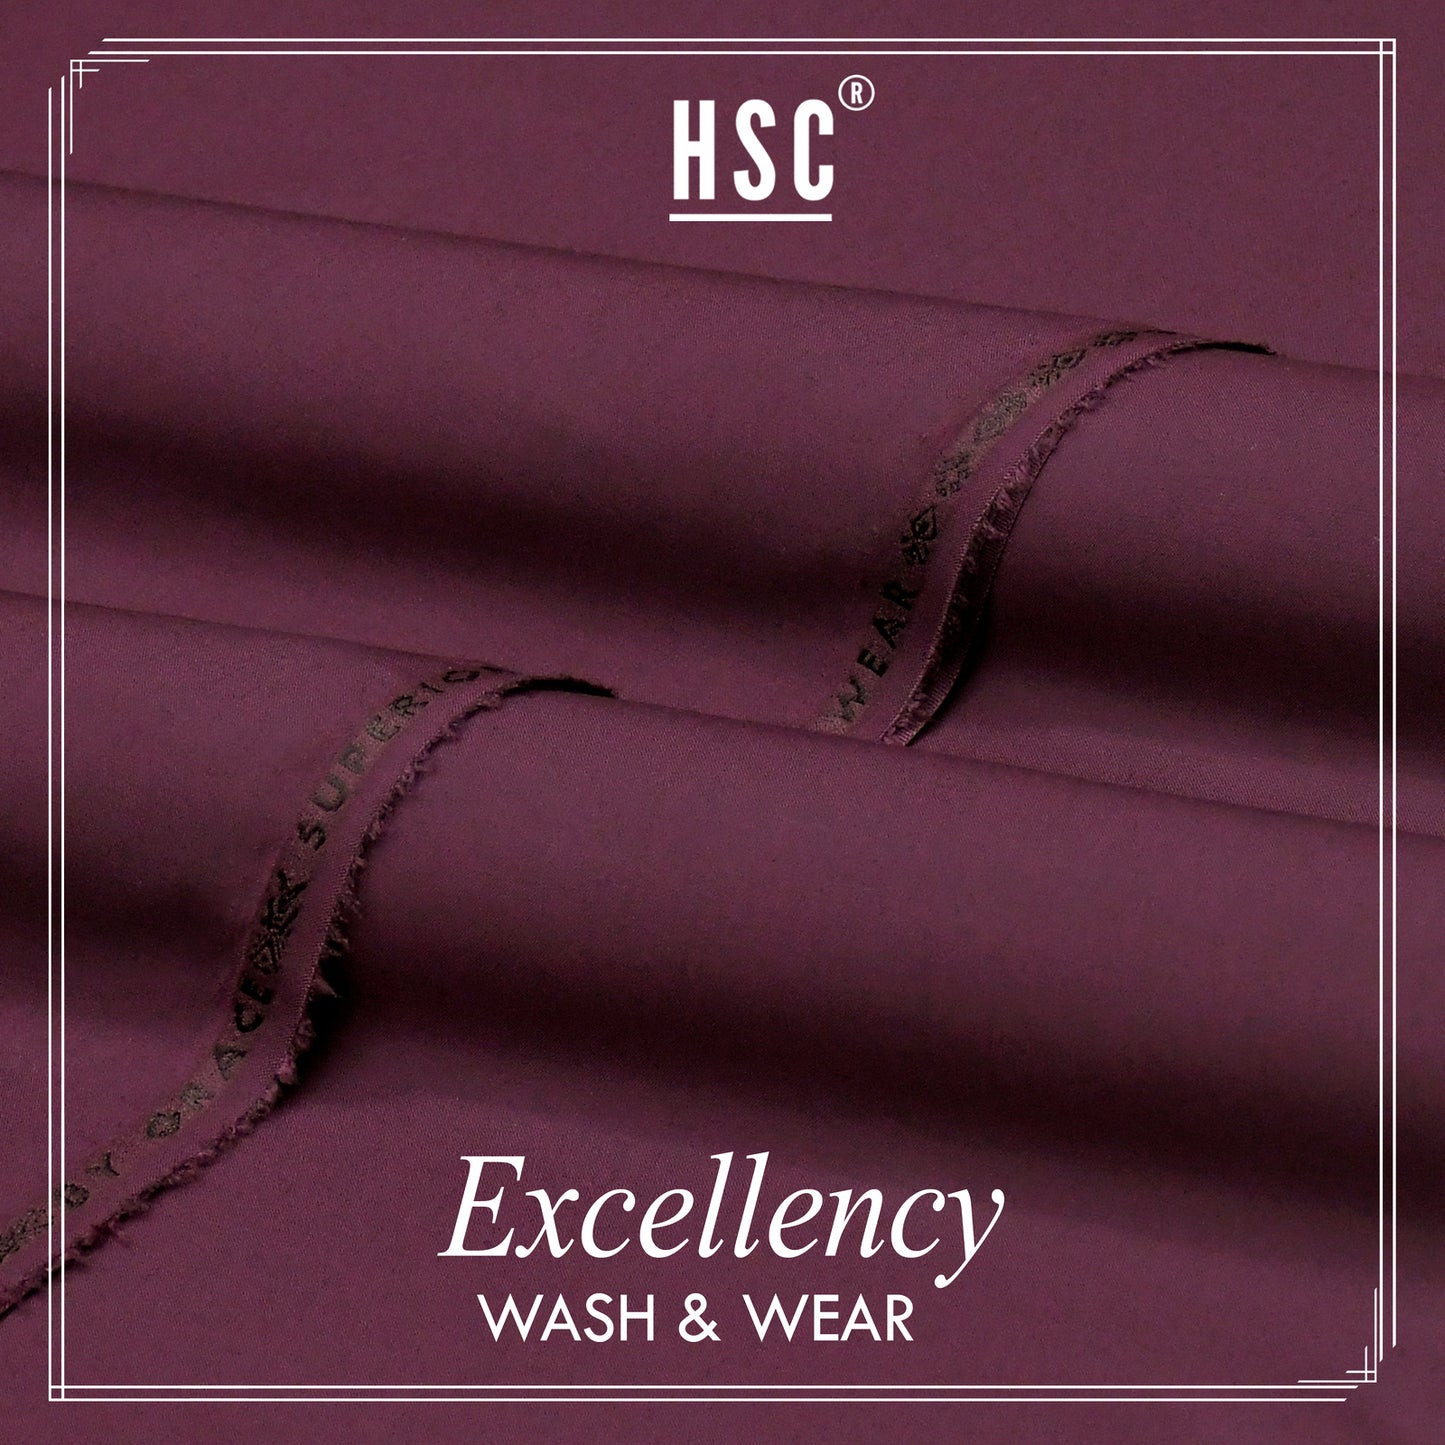 Excellency Wash & Wear For Men - EWA16 HSC